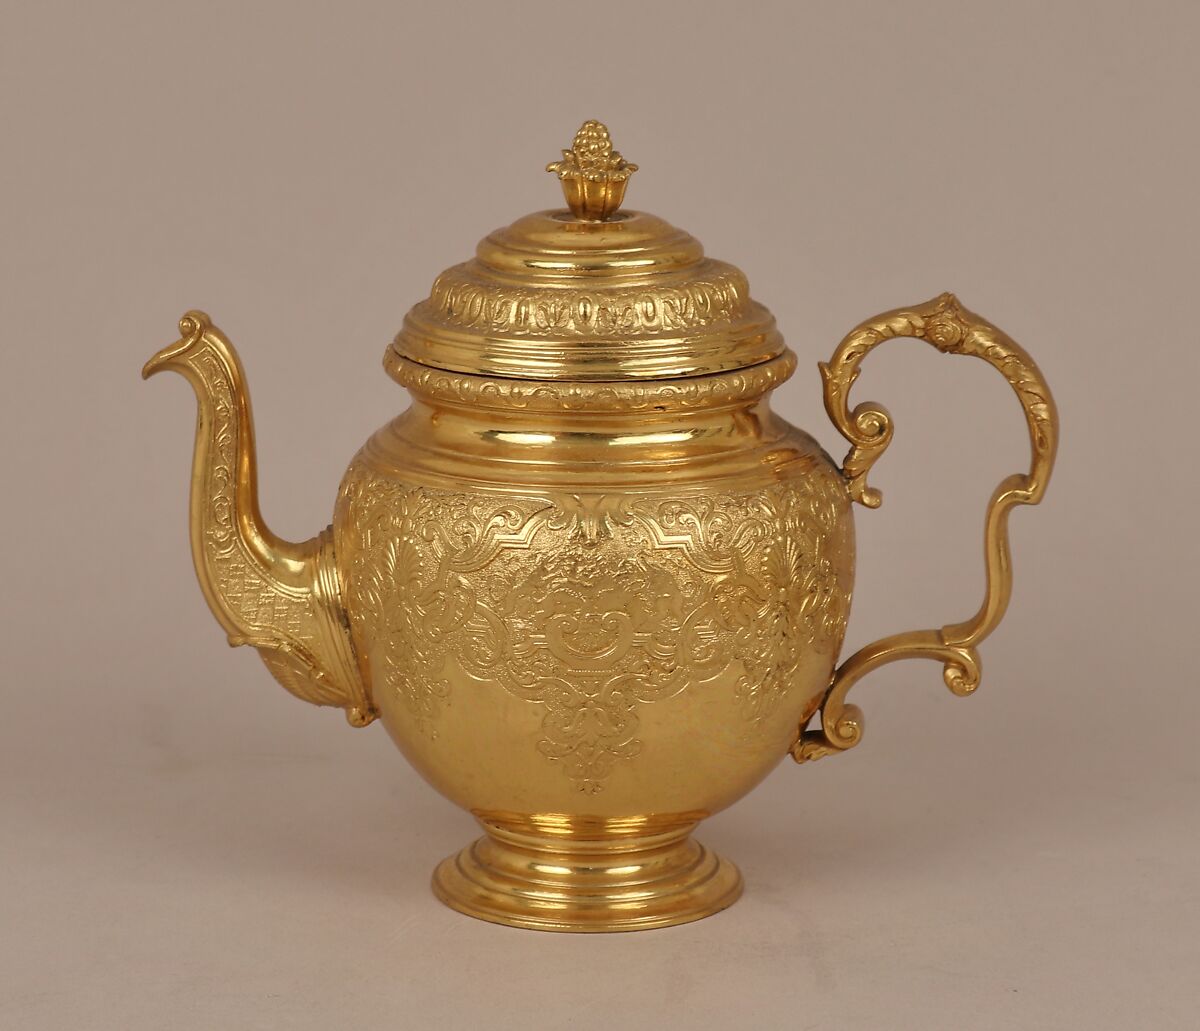 Teapot, After an original by Johann Ludwig Biller (1692–1746), Gold on base metal, British, Birmingham, after German, Augsburg original 